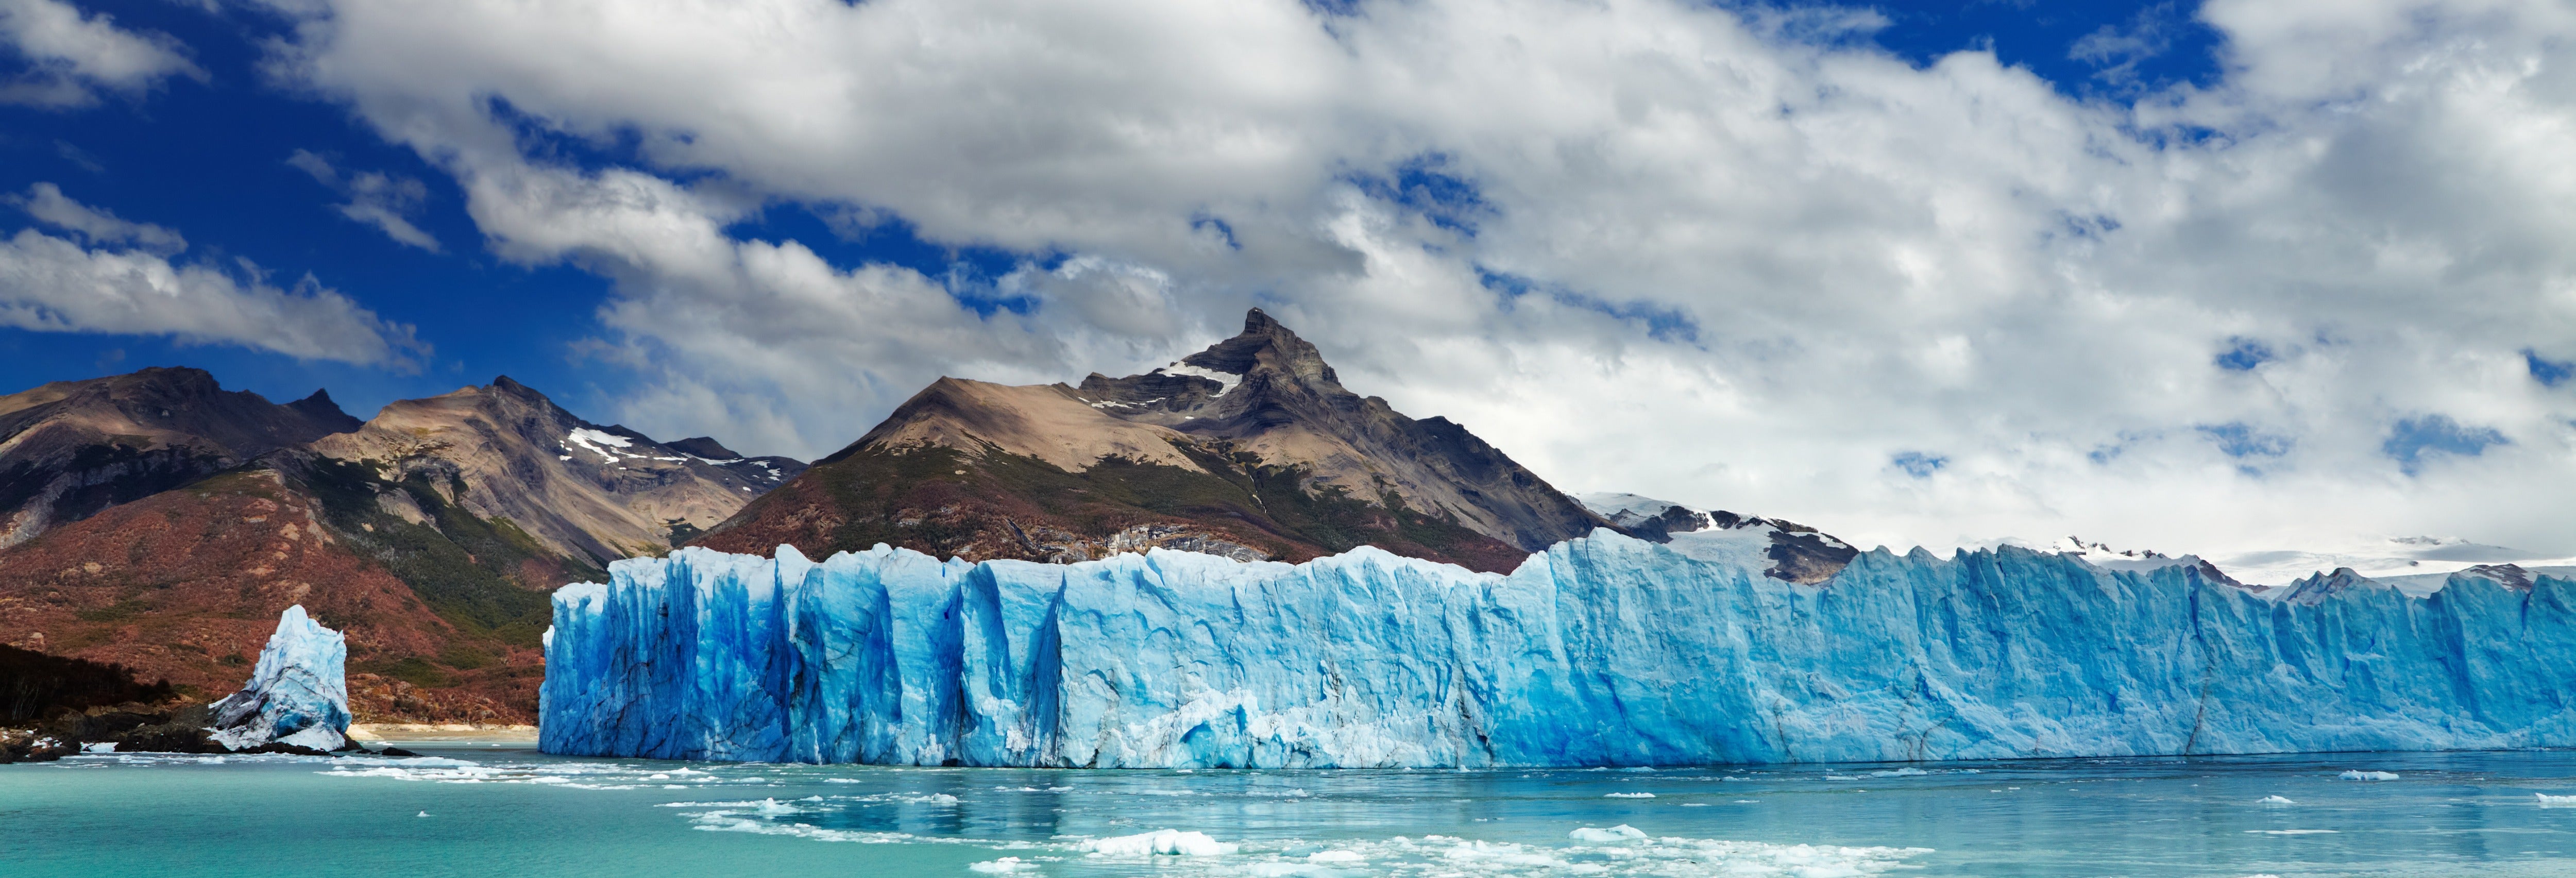 Tour de caiaque pelo glaciar Perito Moreno